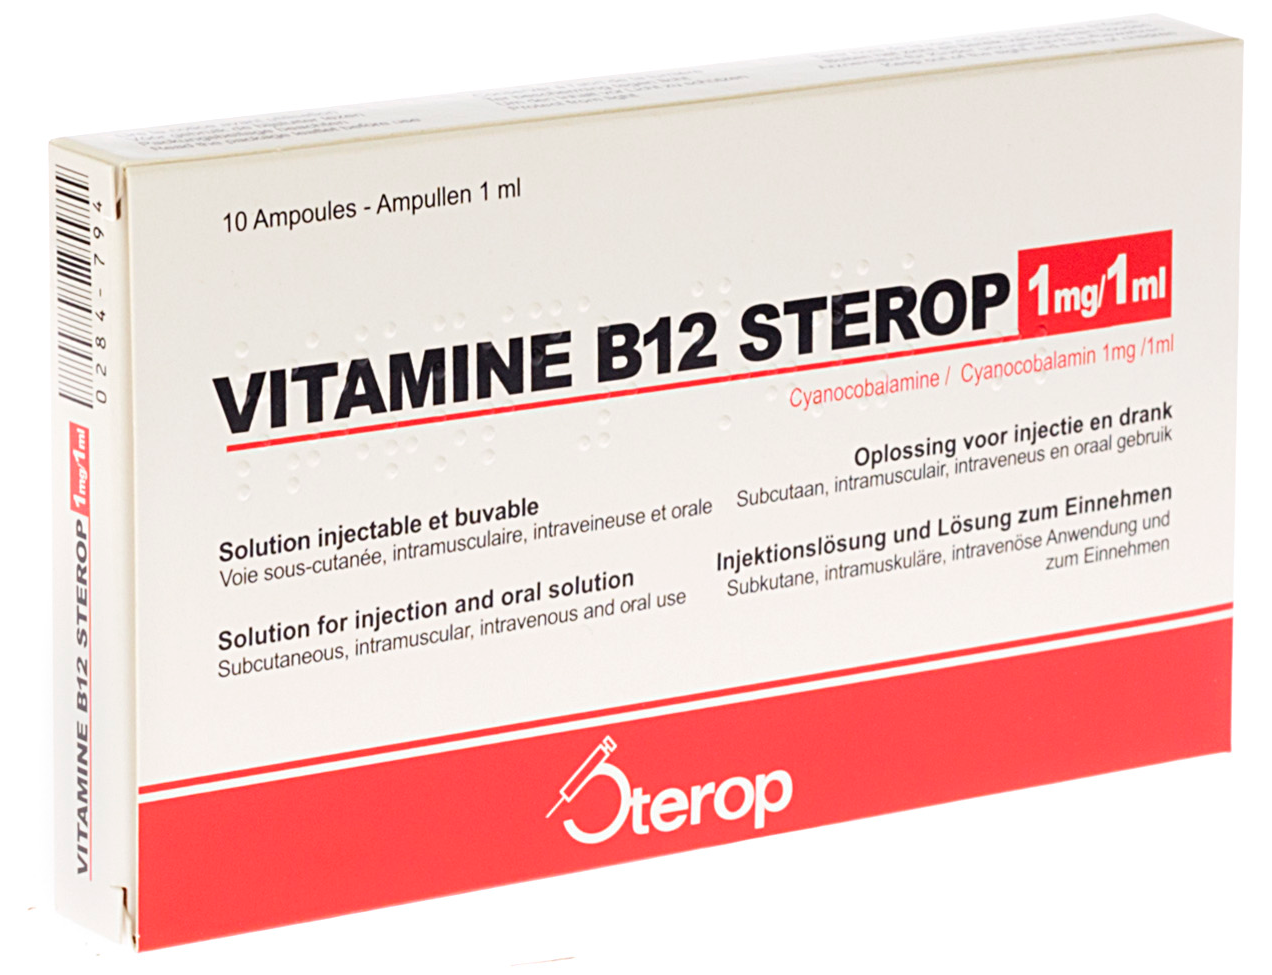 servet Raap ga winkelen Sterop Vitamine B12 1 mg/1 ml 10 ampullen - online bestellen | Optiphar